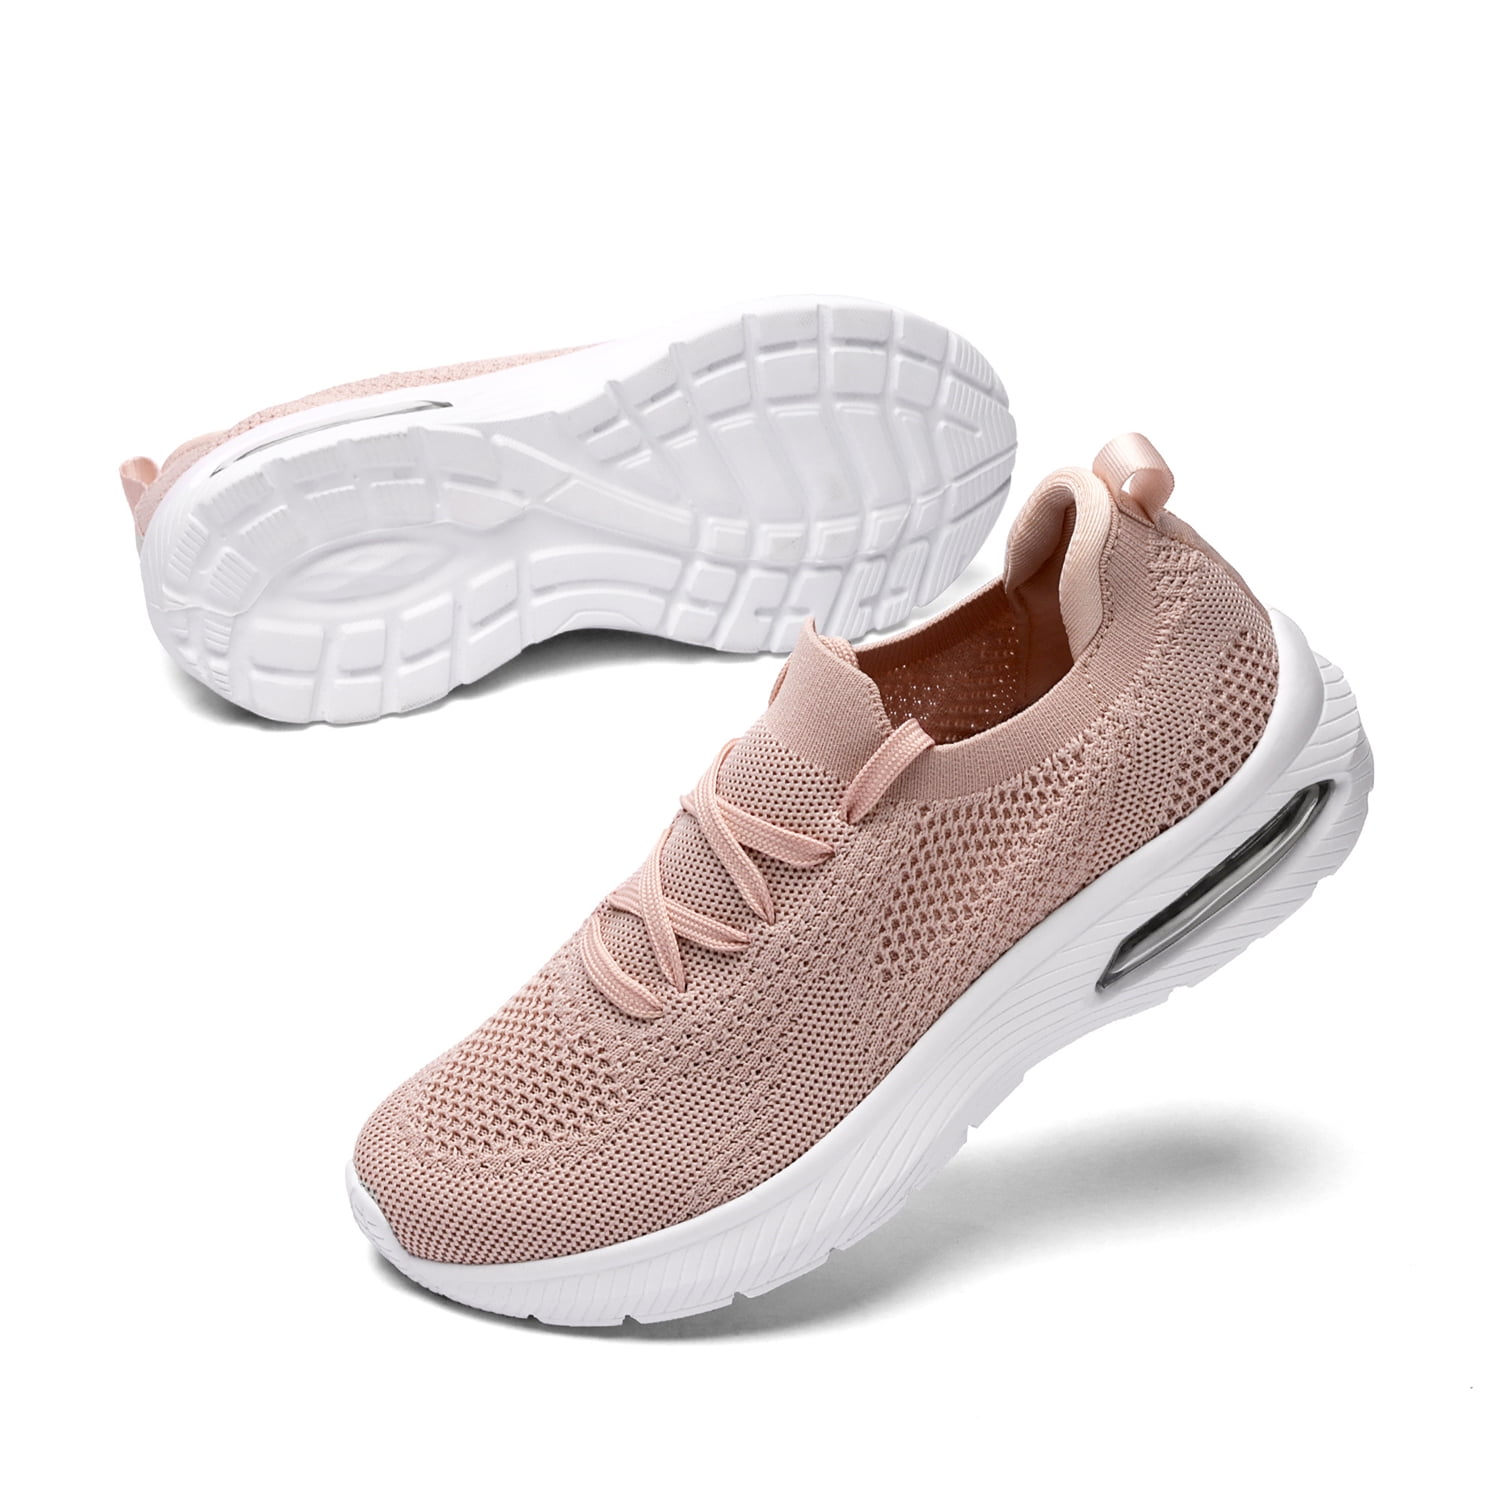 OCEAN-STORE Womens Platform Rocking Shoes Cushion Light Flying Dance Sports Casual Lightweight Sneaker 